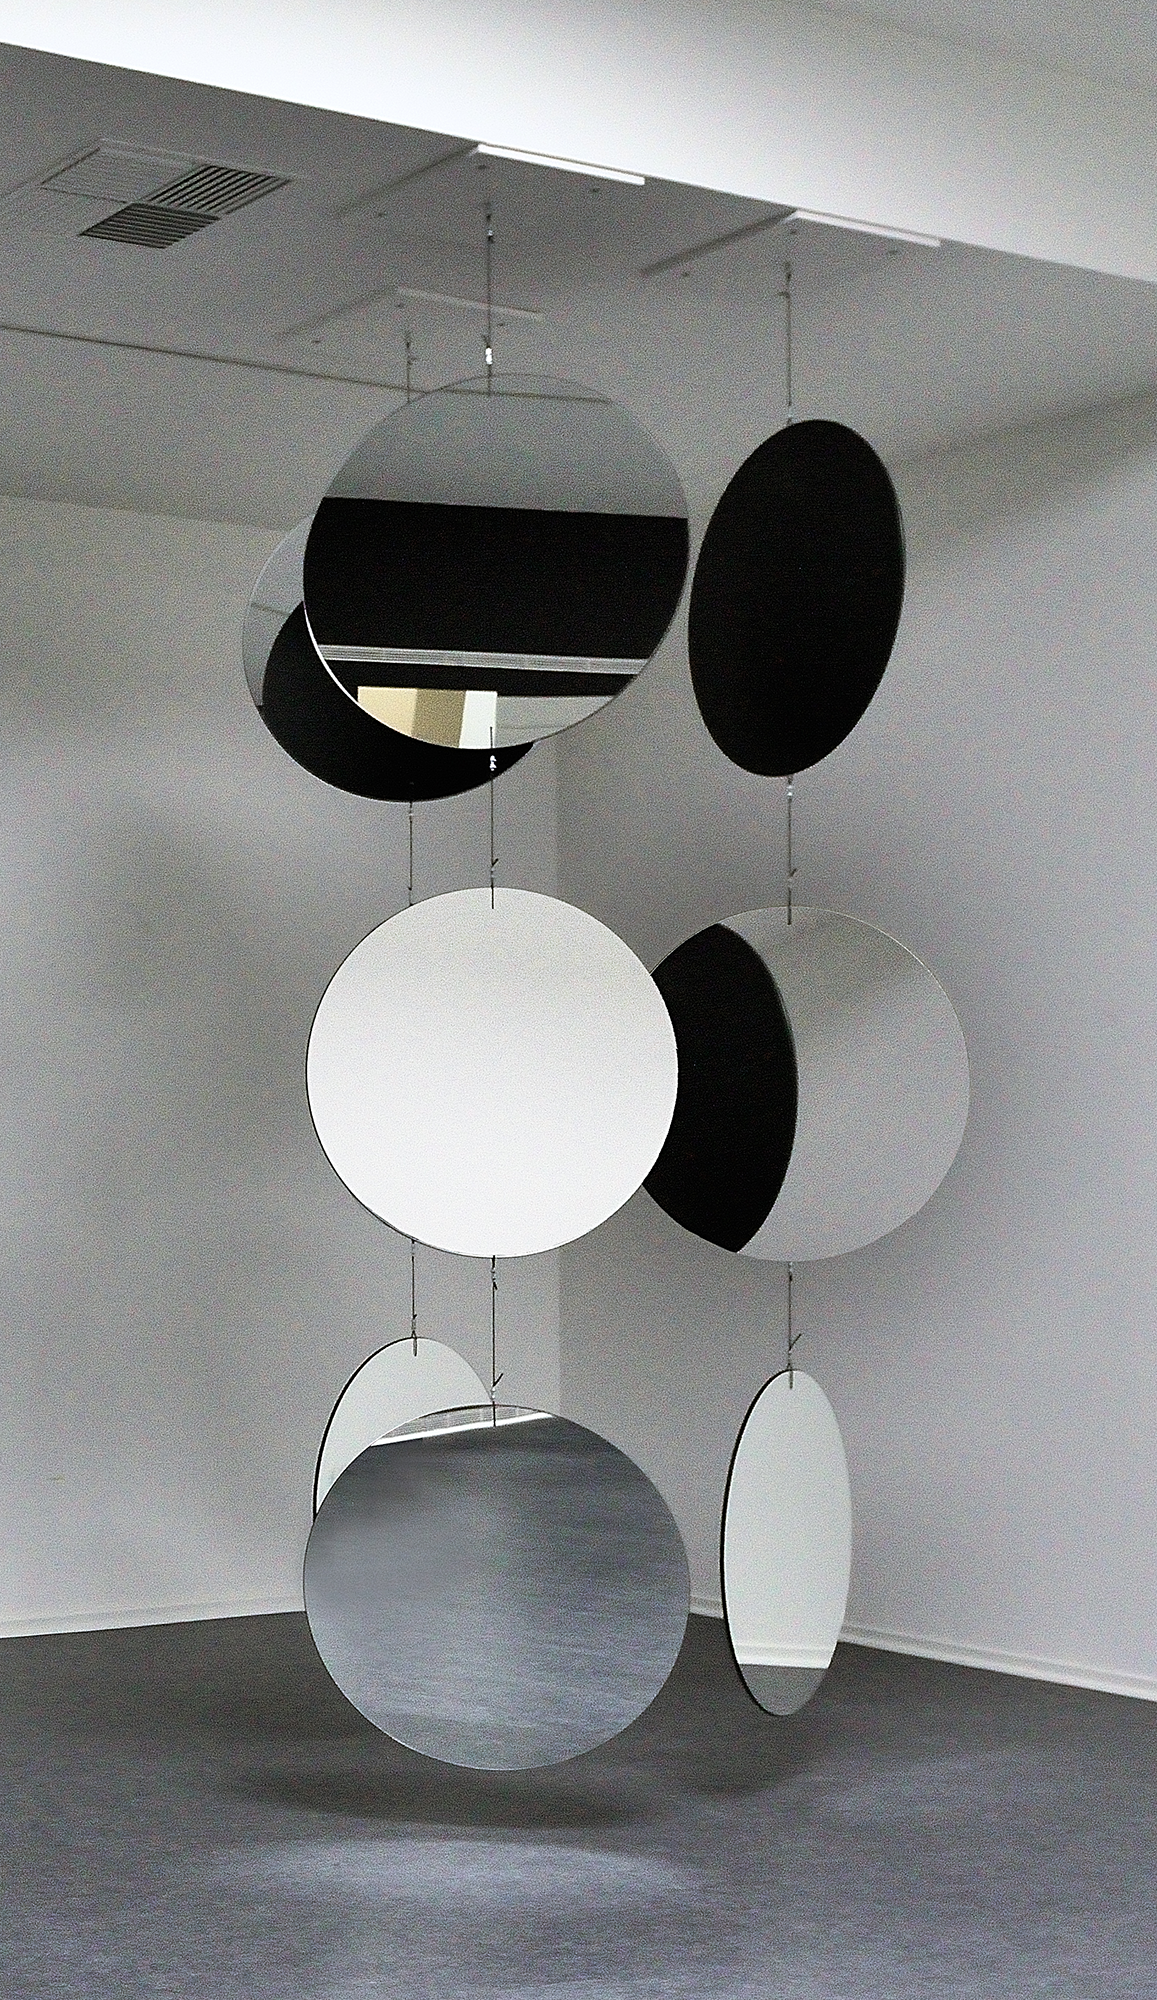 Christian Megert, Mobile, 1965-2014, legno, specchio